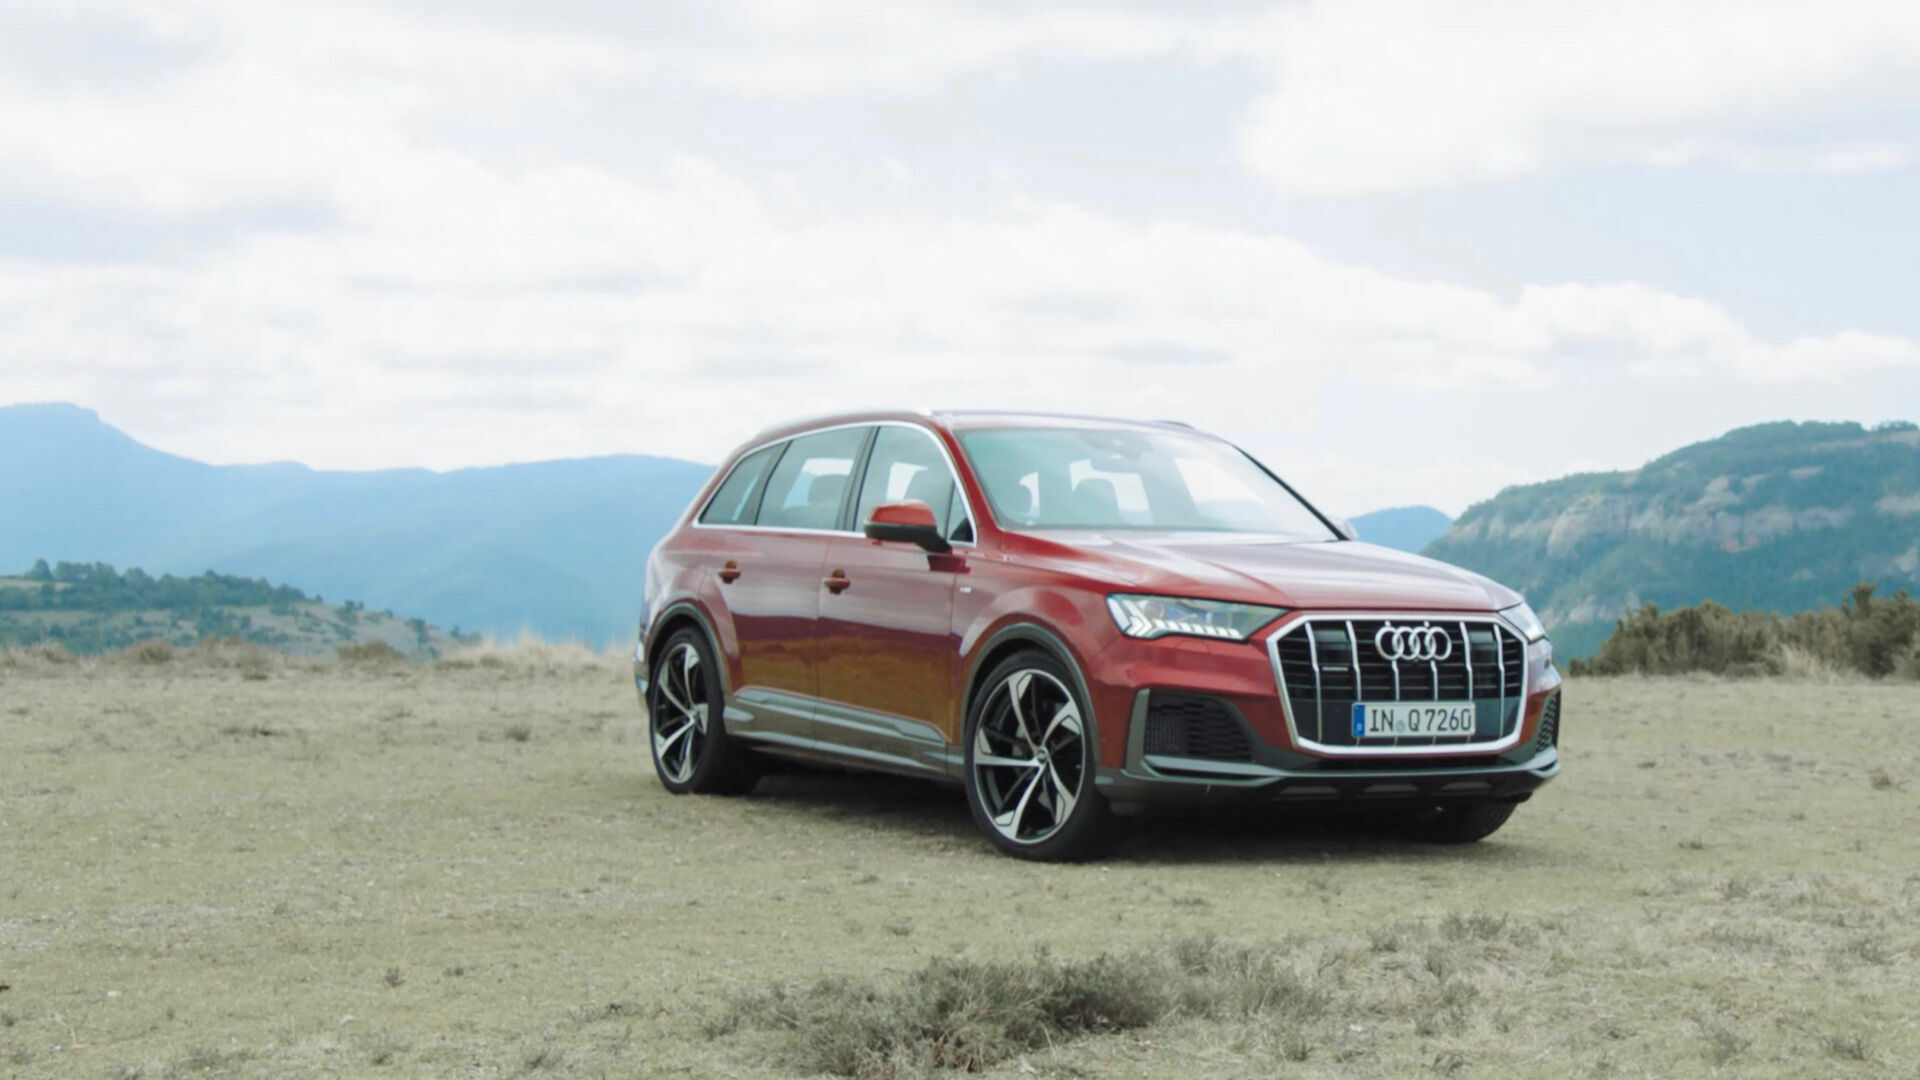 The new Audi Q7 (trailer)